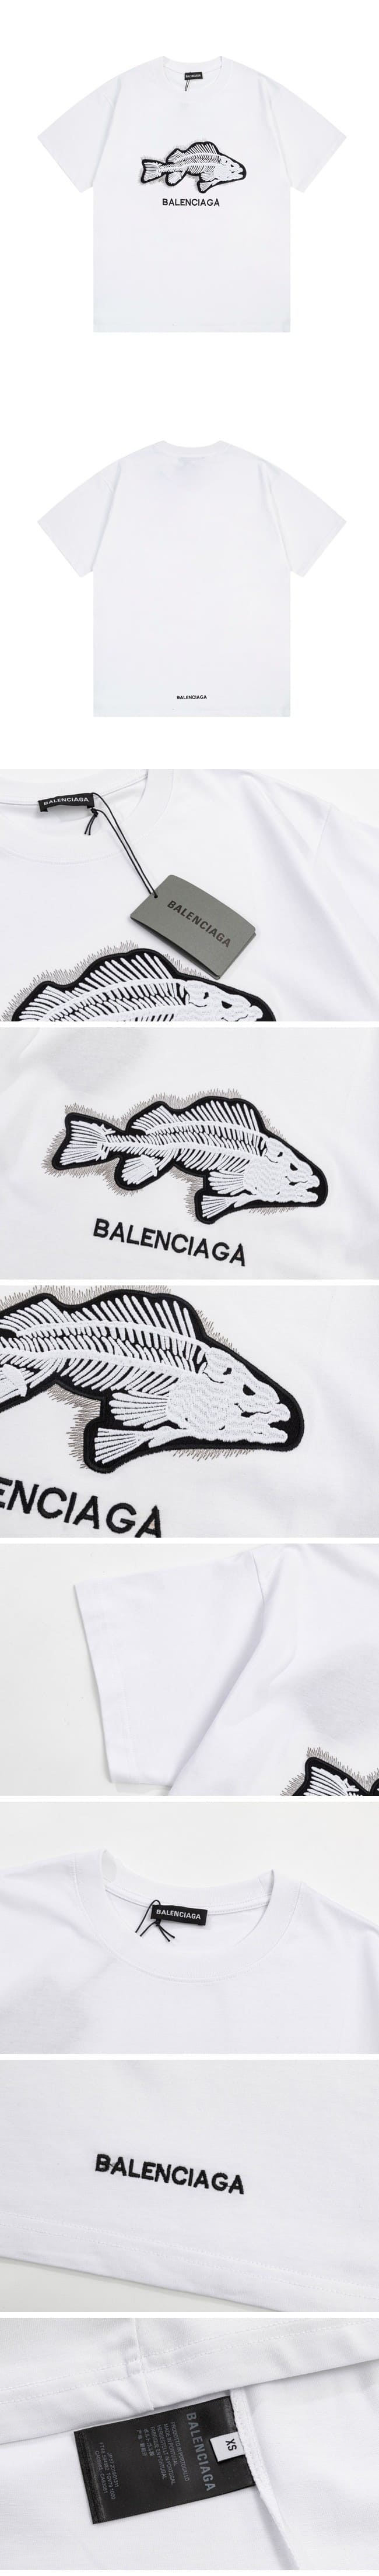 Balenciaga Fishbone Tee White バレンシアガ フィッシュボーン Tシャツ ホワイト